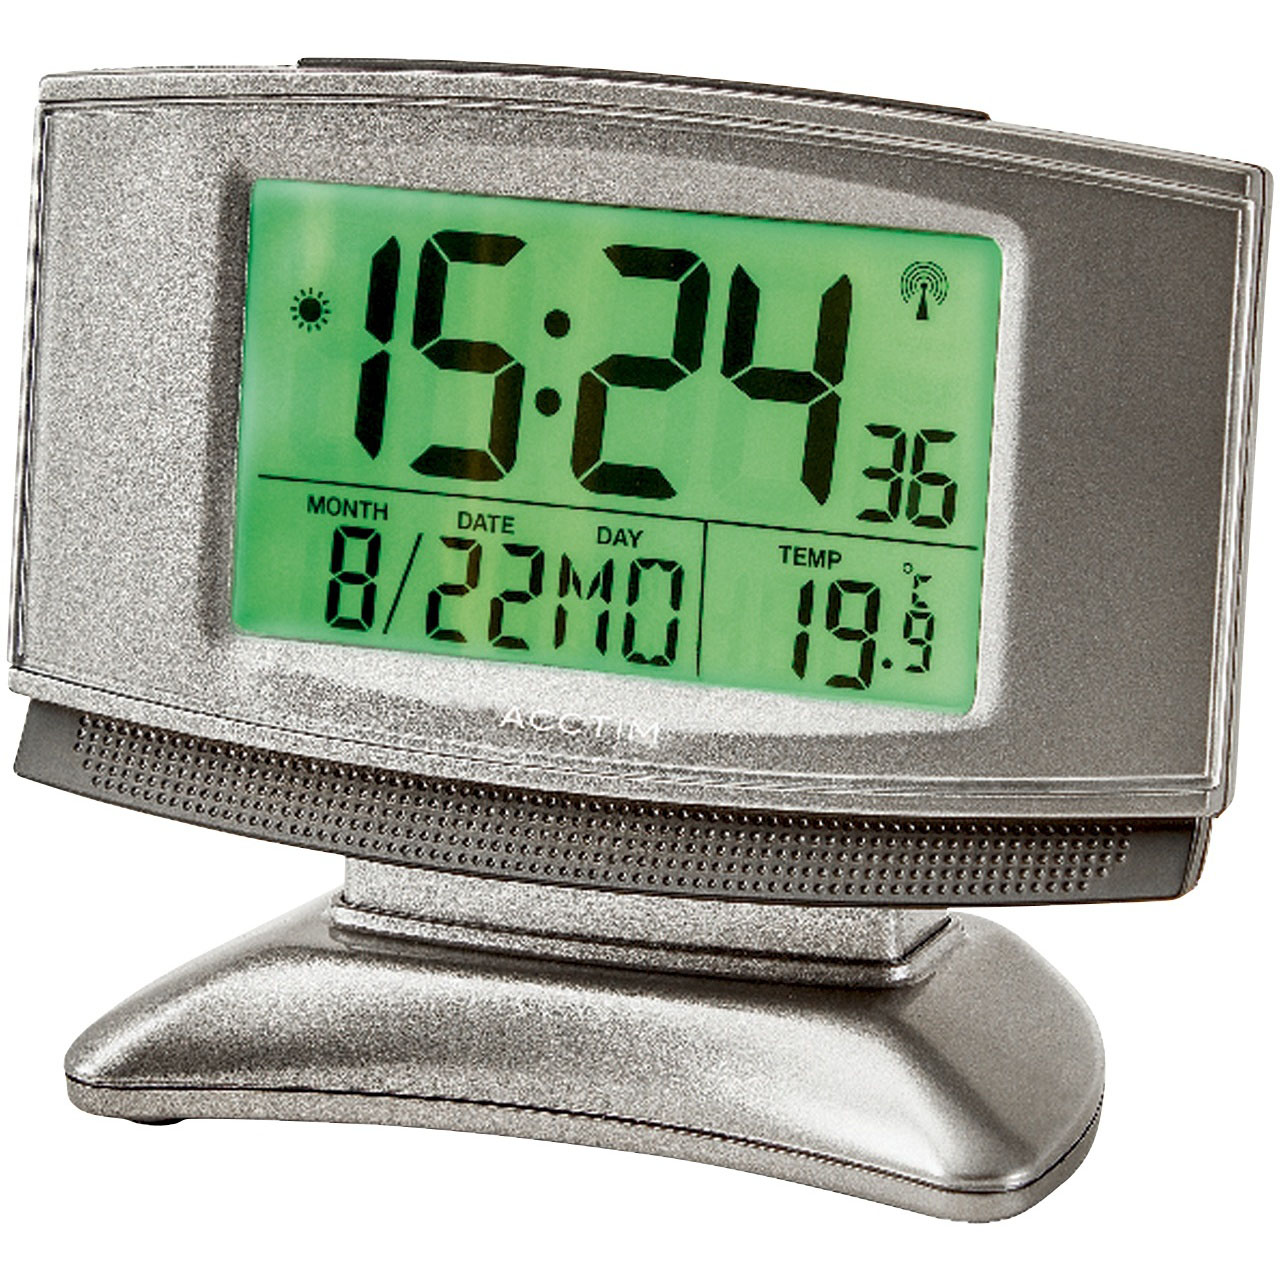 Smartlite Radio Controlled Alarm Clock